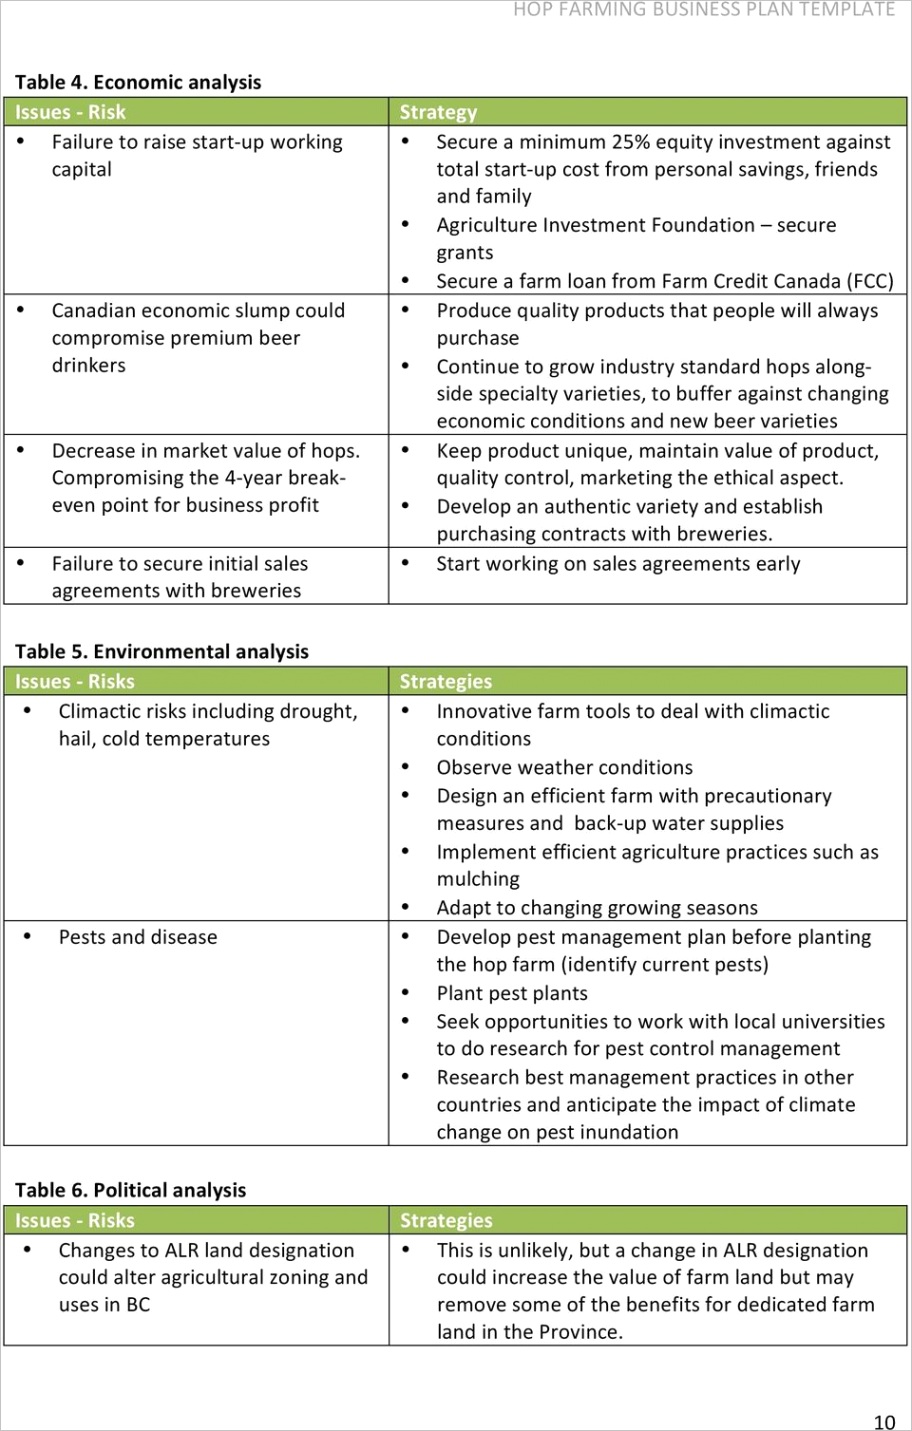 Technical report 2 hop farming business plan template